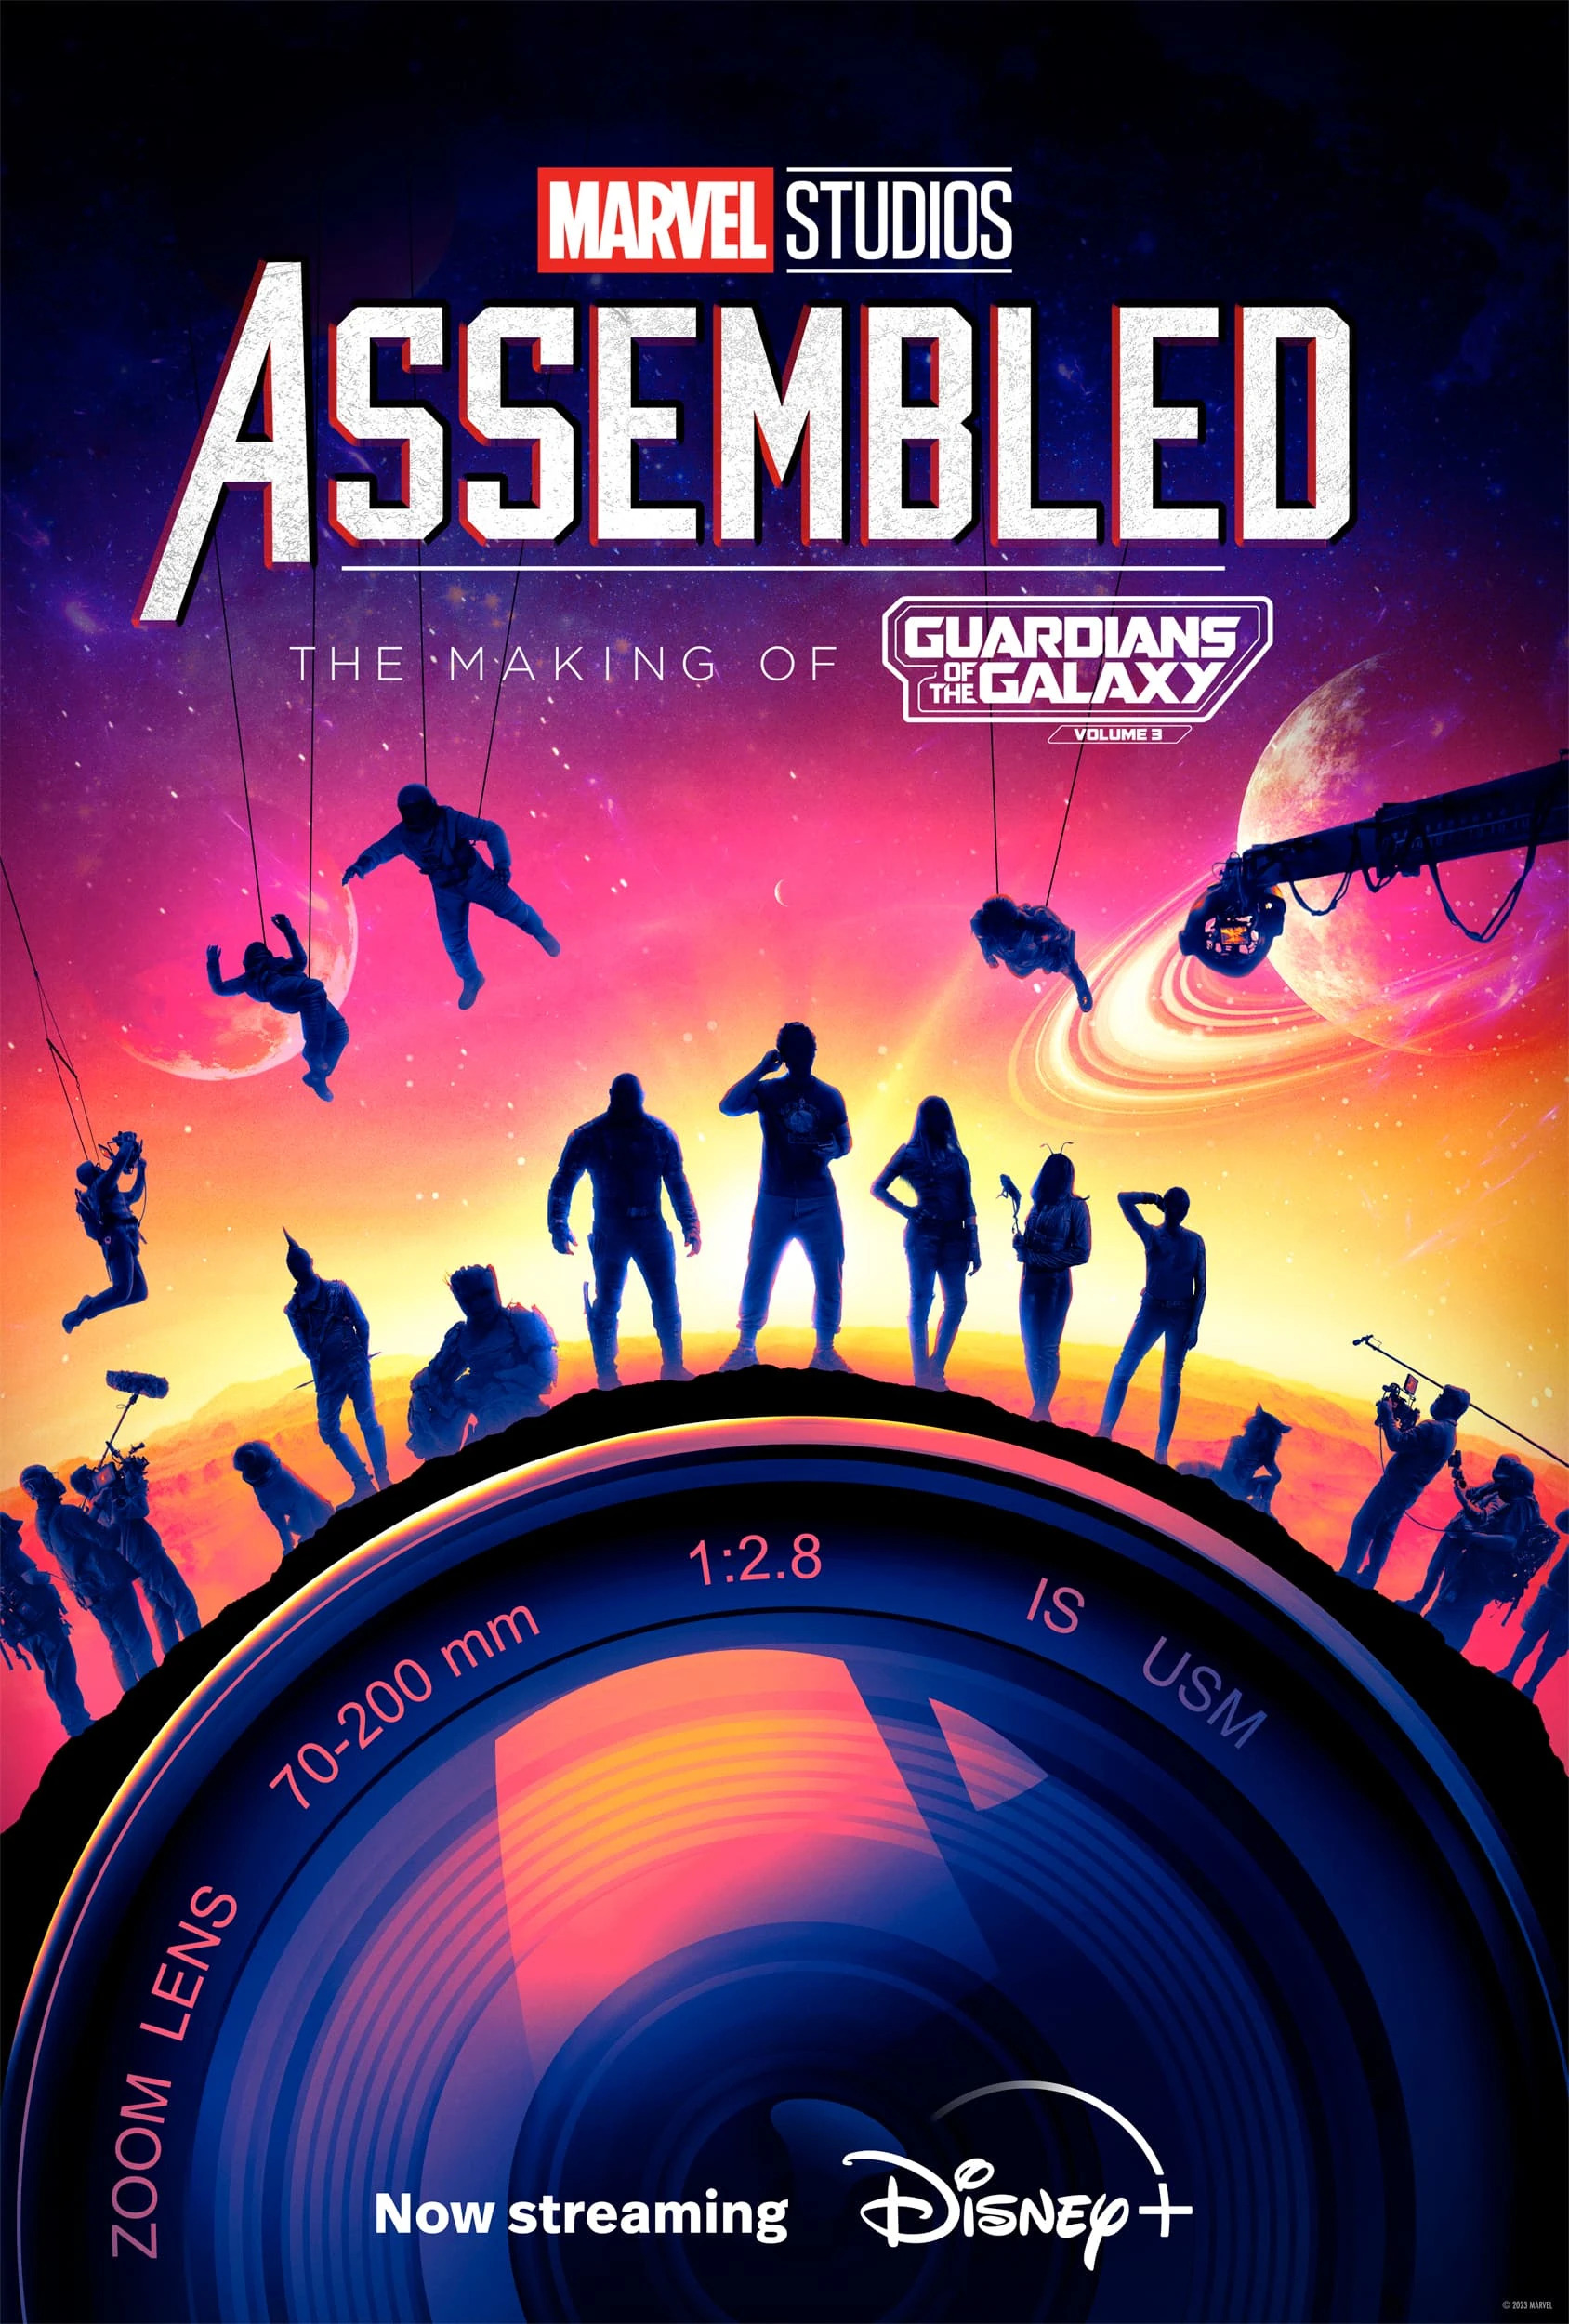 Mega Sized TV Poster Image for Marvel Studios: Assembled (#16 of 20)